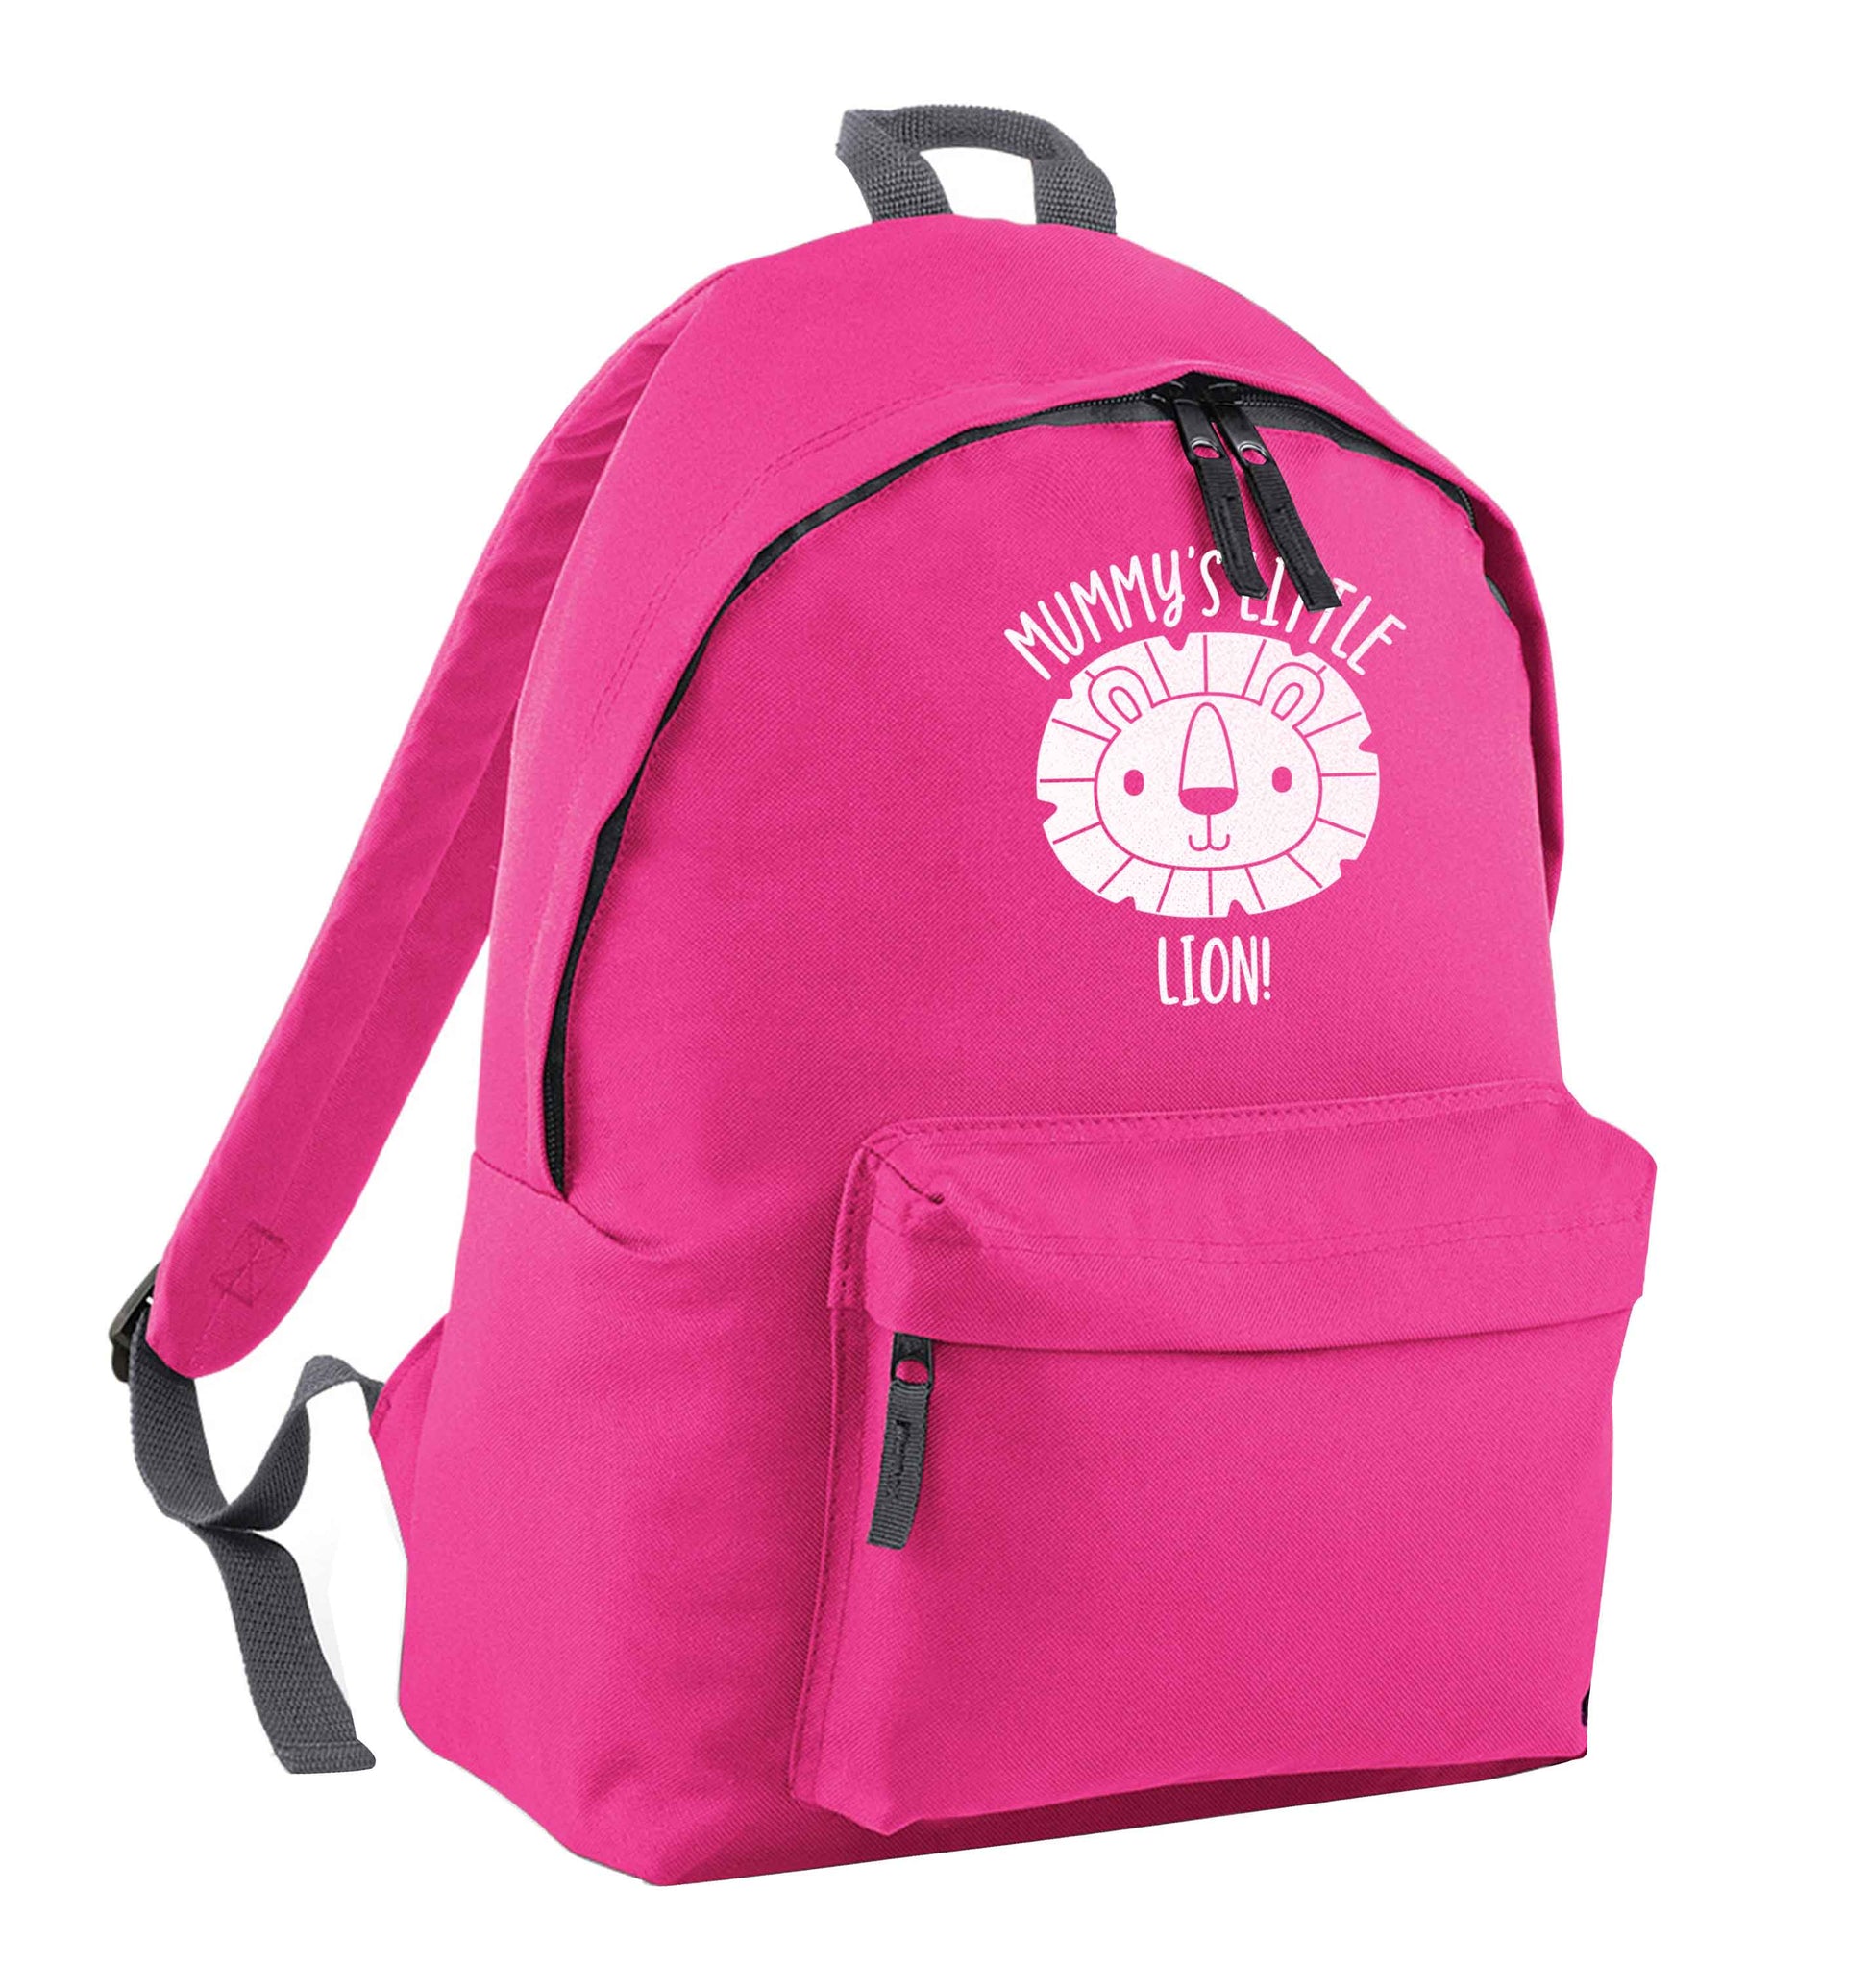 Mummy's little lion pink children's backpack